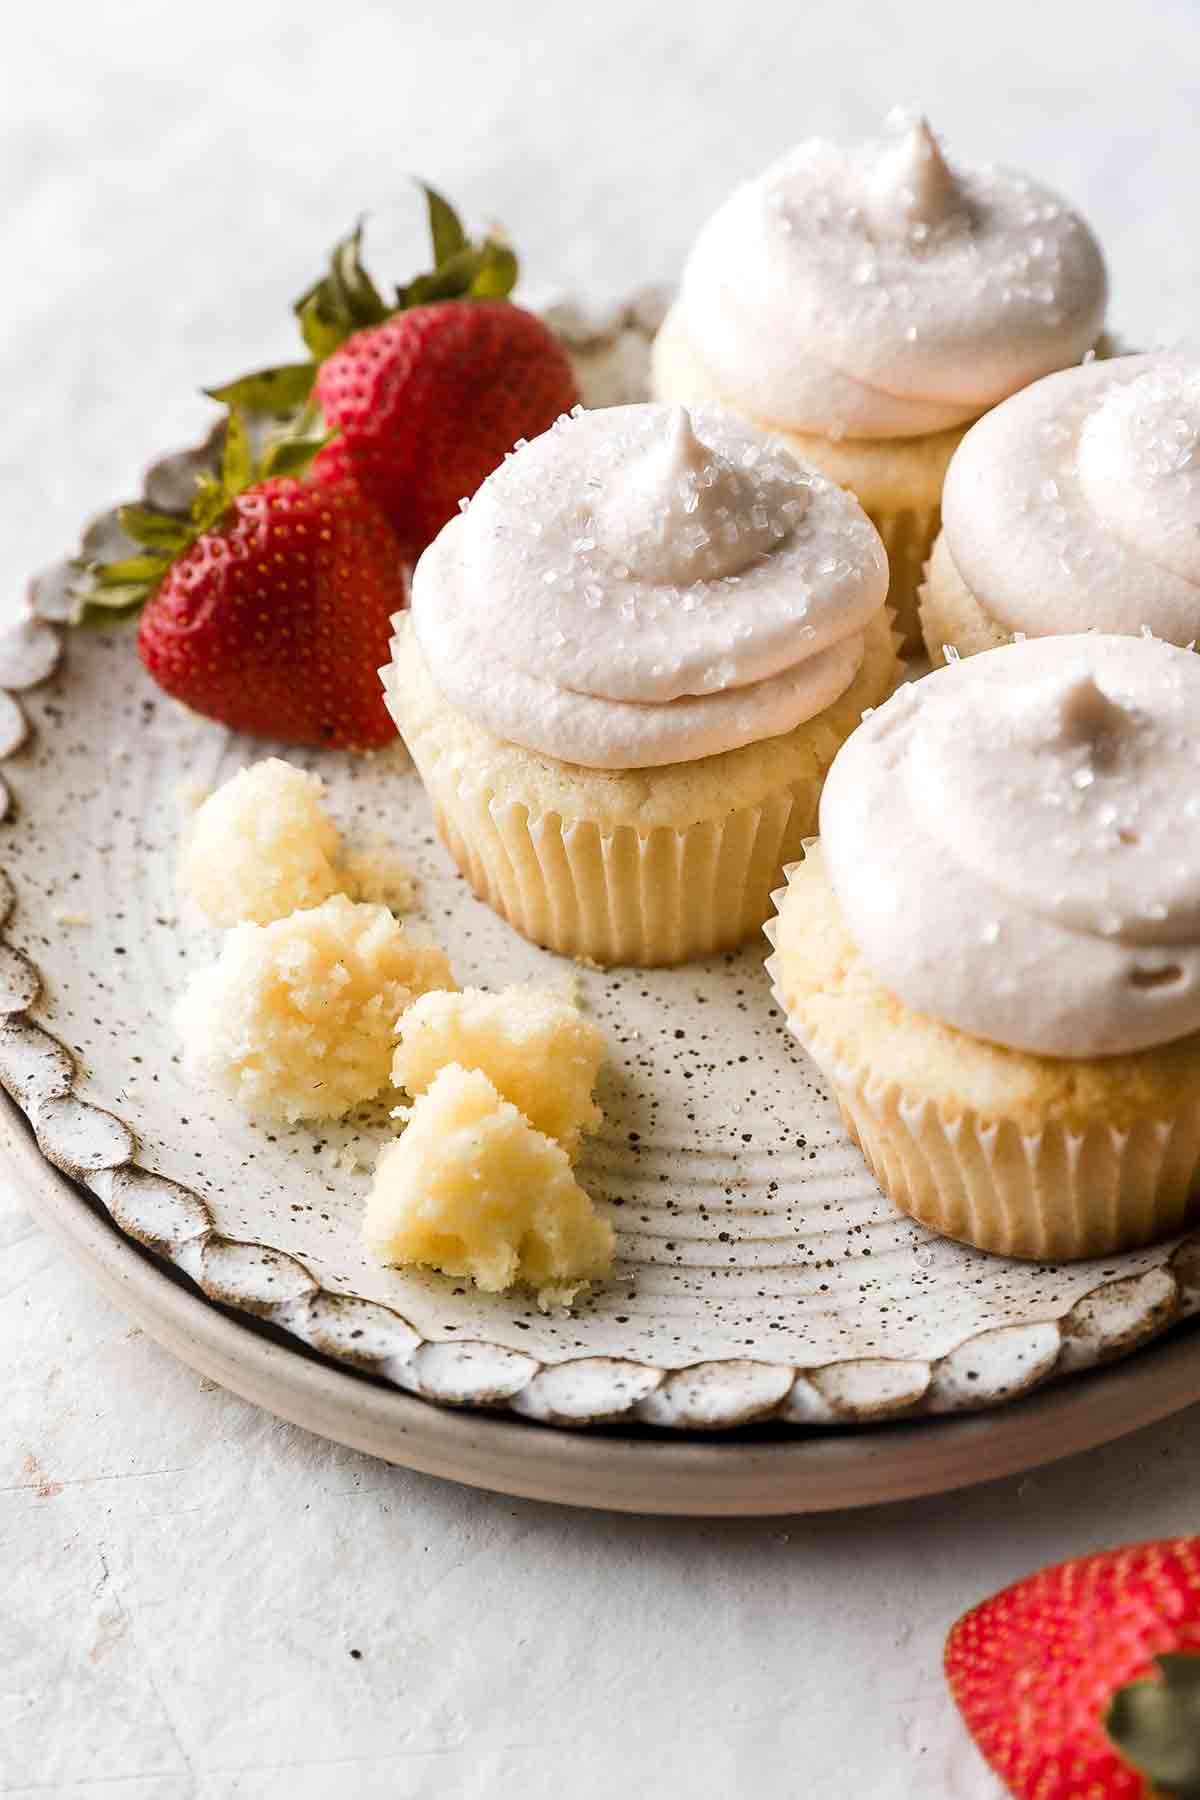 https://baranbakery.com/wp-content/uploads/2021/07/strawberries-and-cream-cupcakes-5.jpg